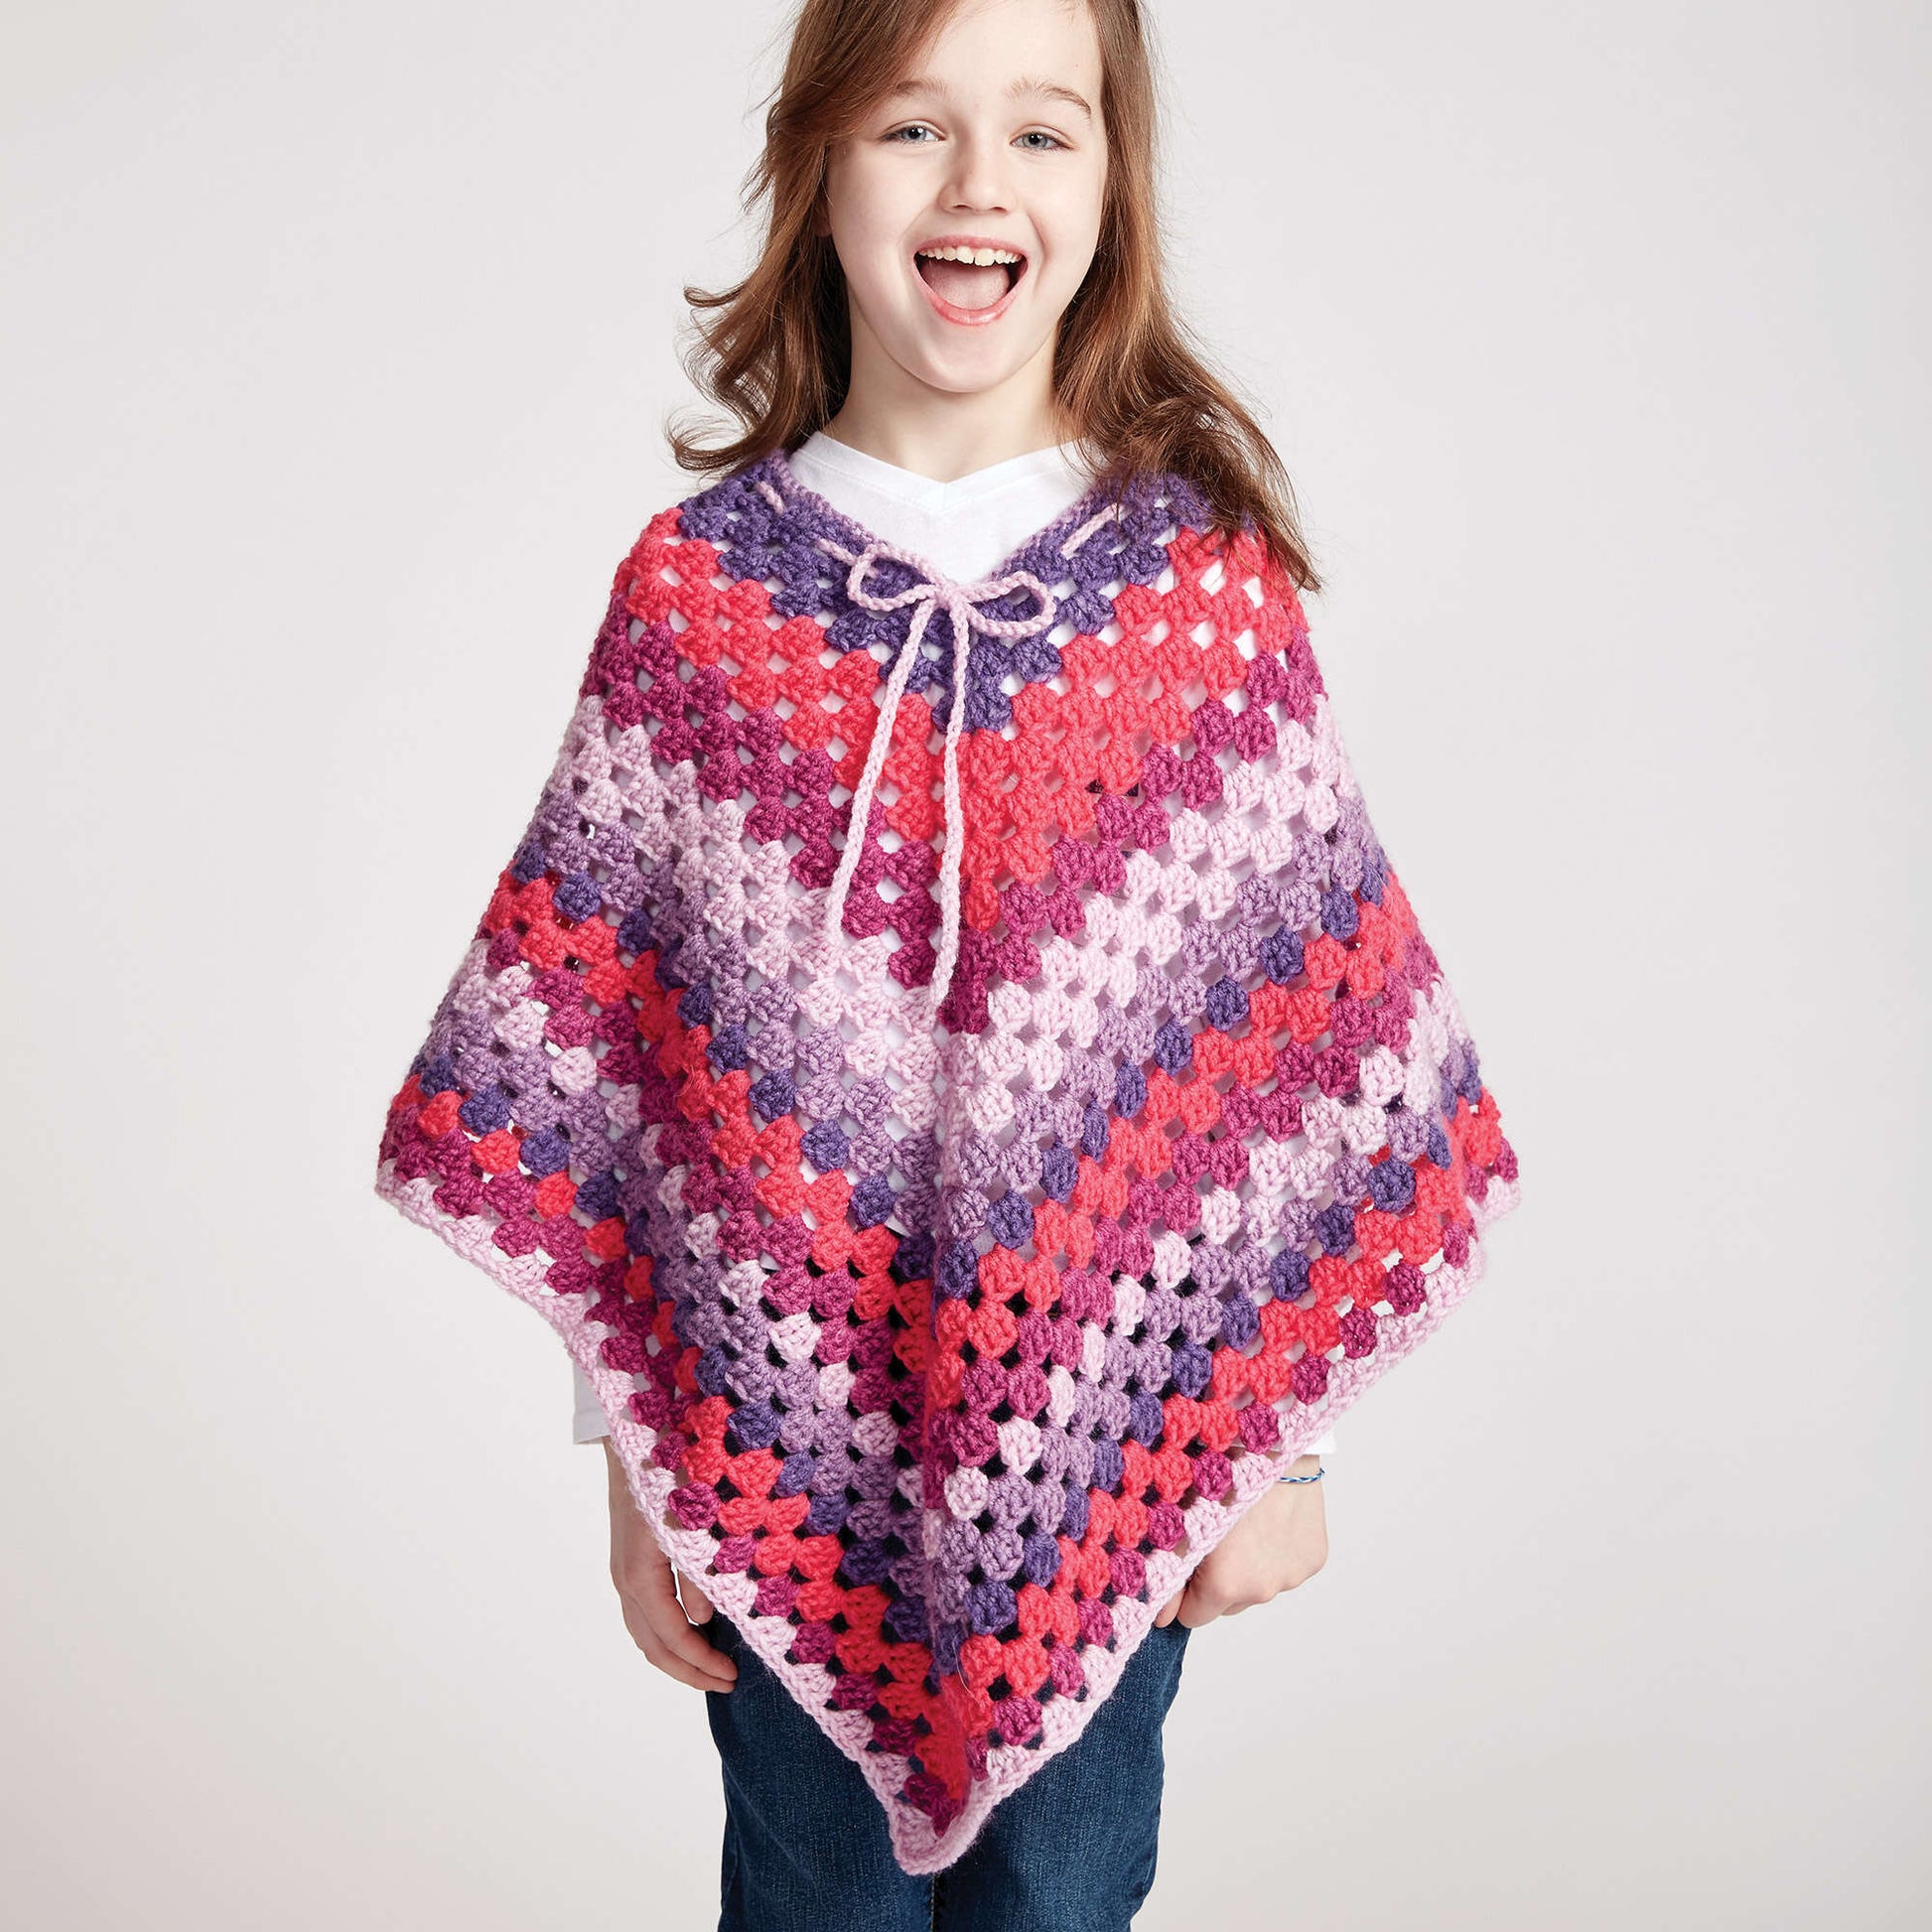 Free Bernat Girl's Crochet Poncho Pattern